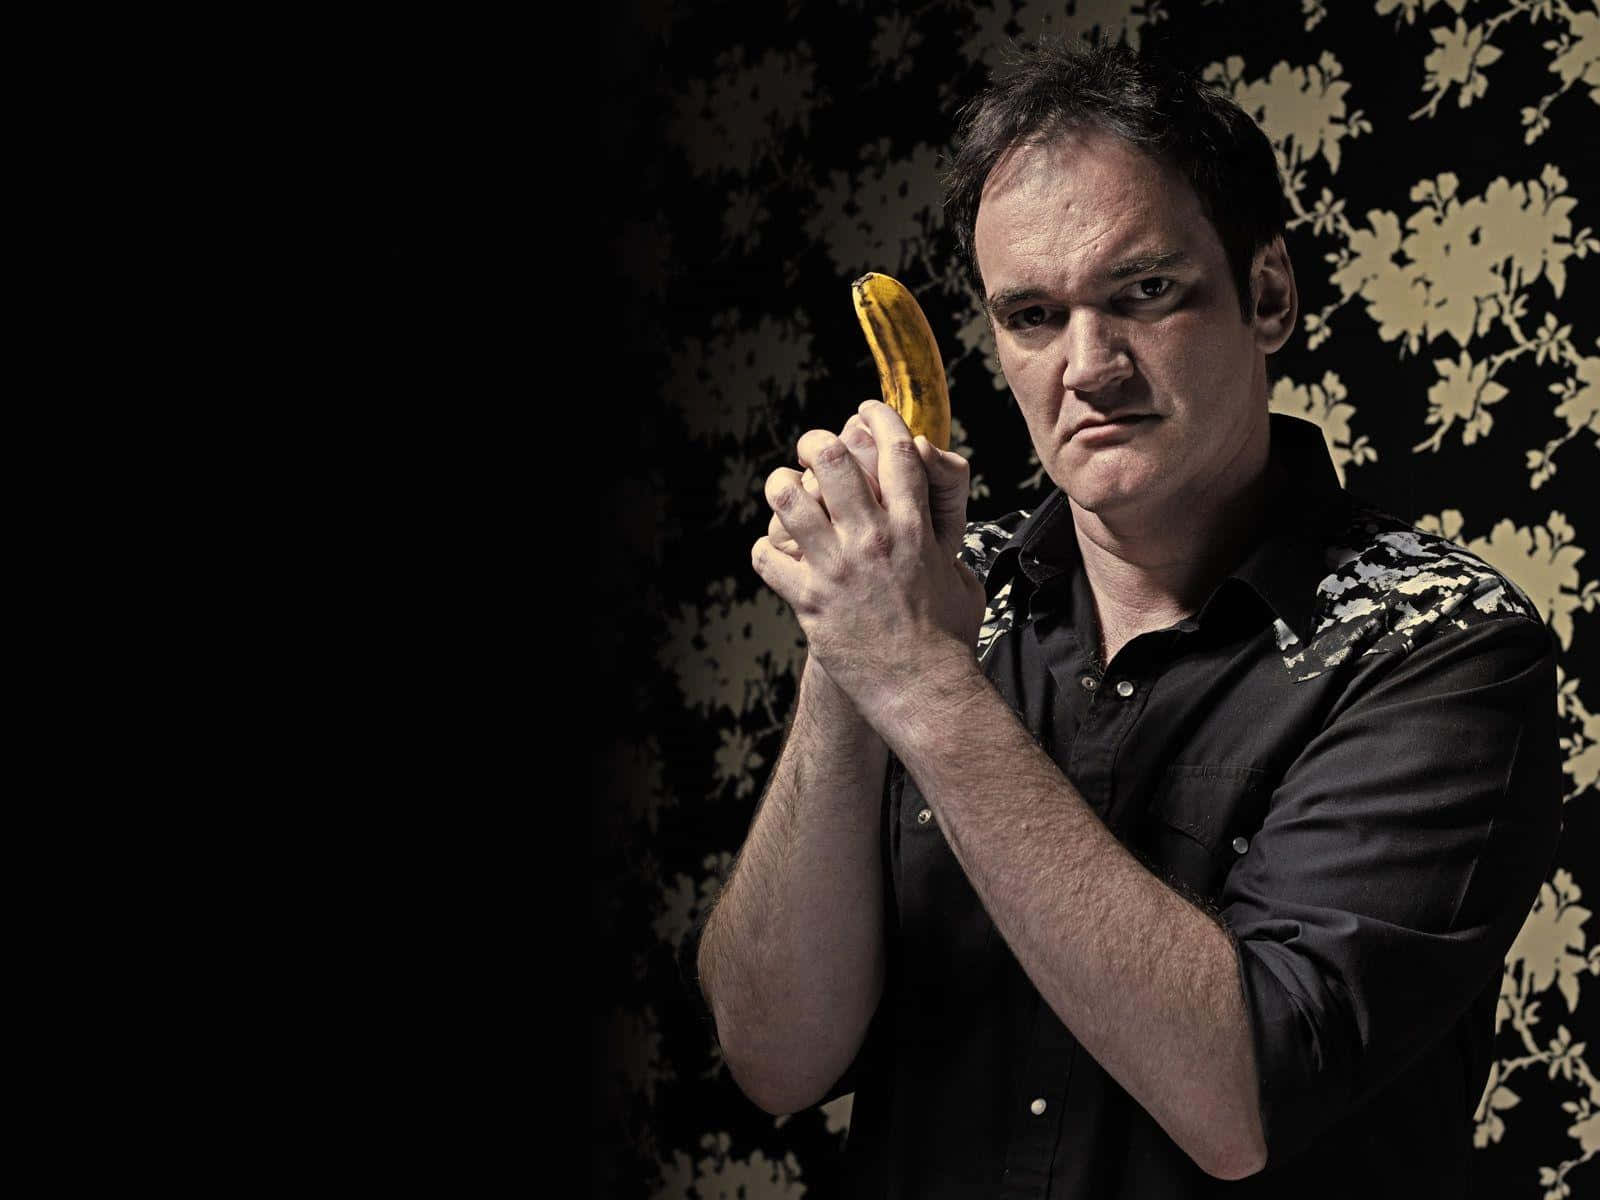 Quentin_ Tarantino_ Holding_ Banana